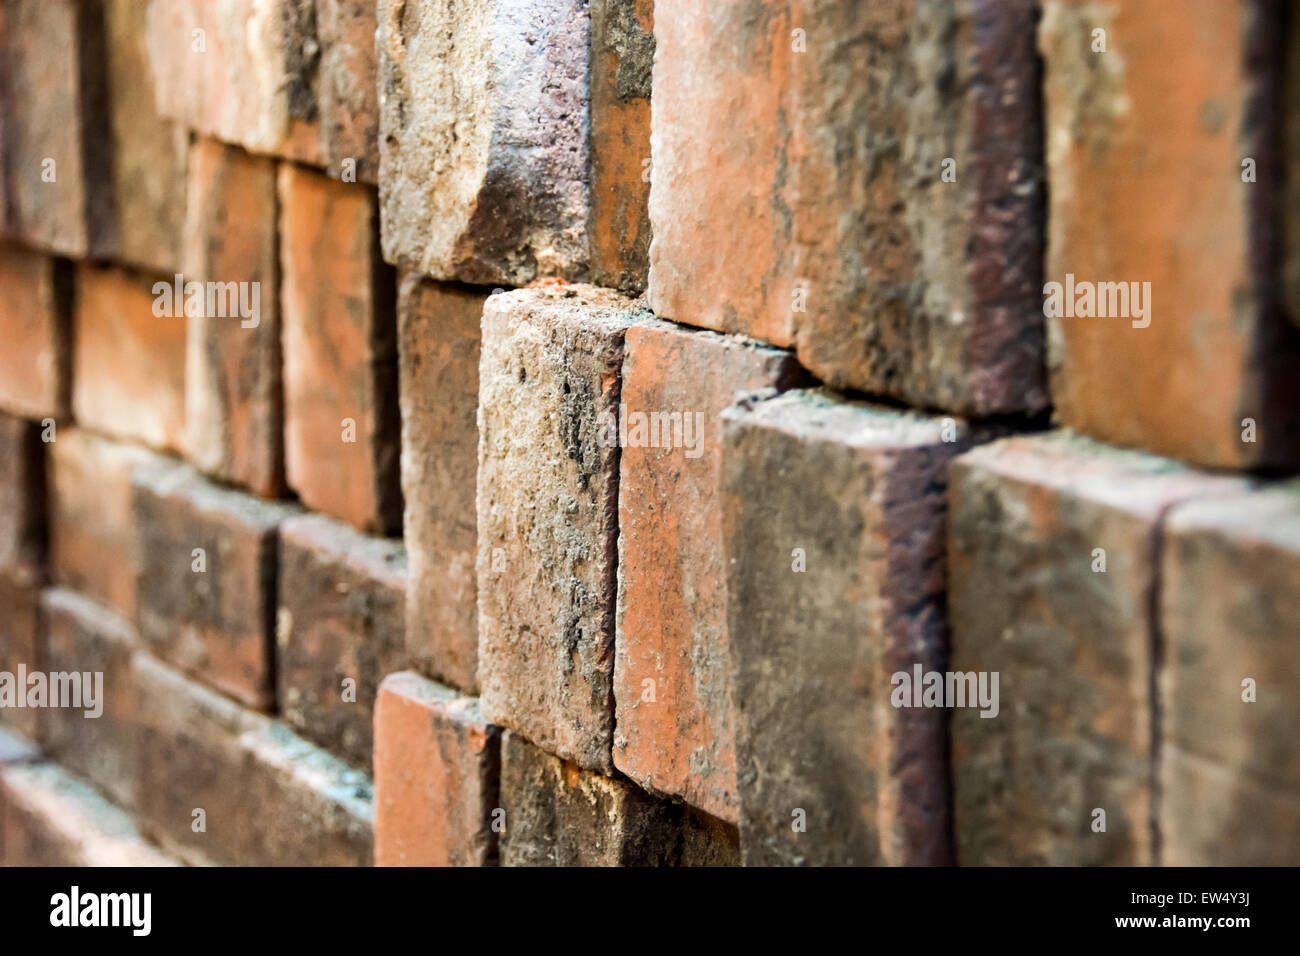 bricks, construction, layers, orange, abstract, rough, texture, rows, horizontal, building, materials, raw Stock Photo